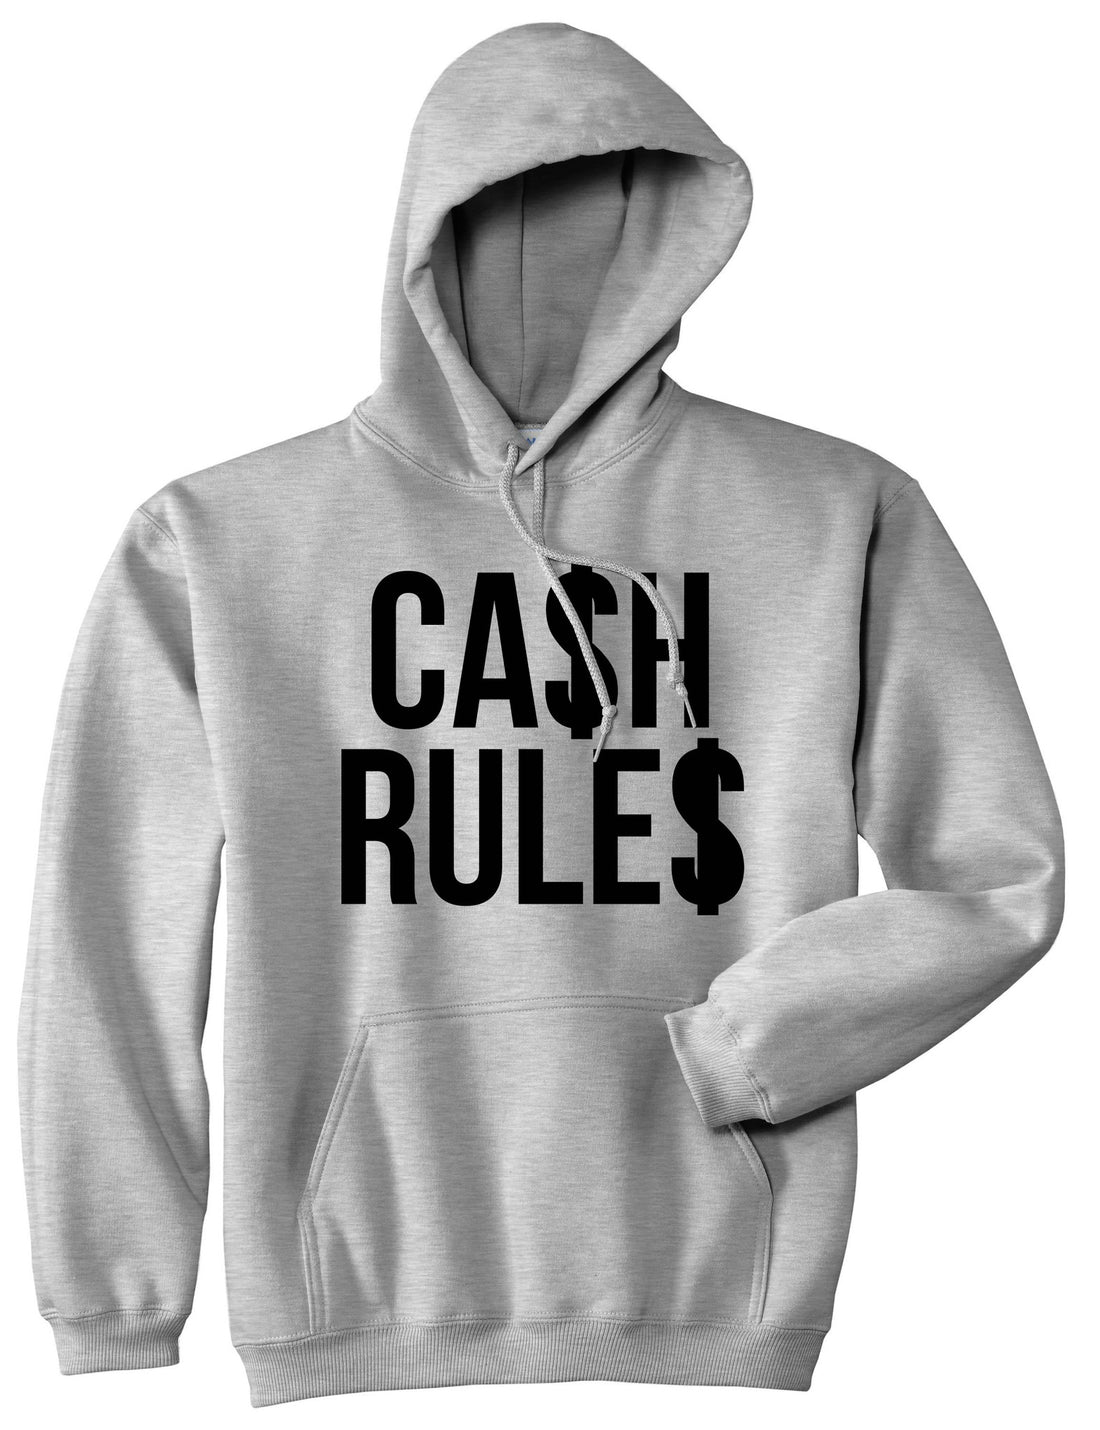 Cash Rules Pullover Hoodie Hoody in Grey by Kings Of NY